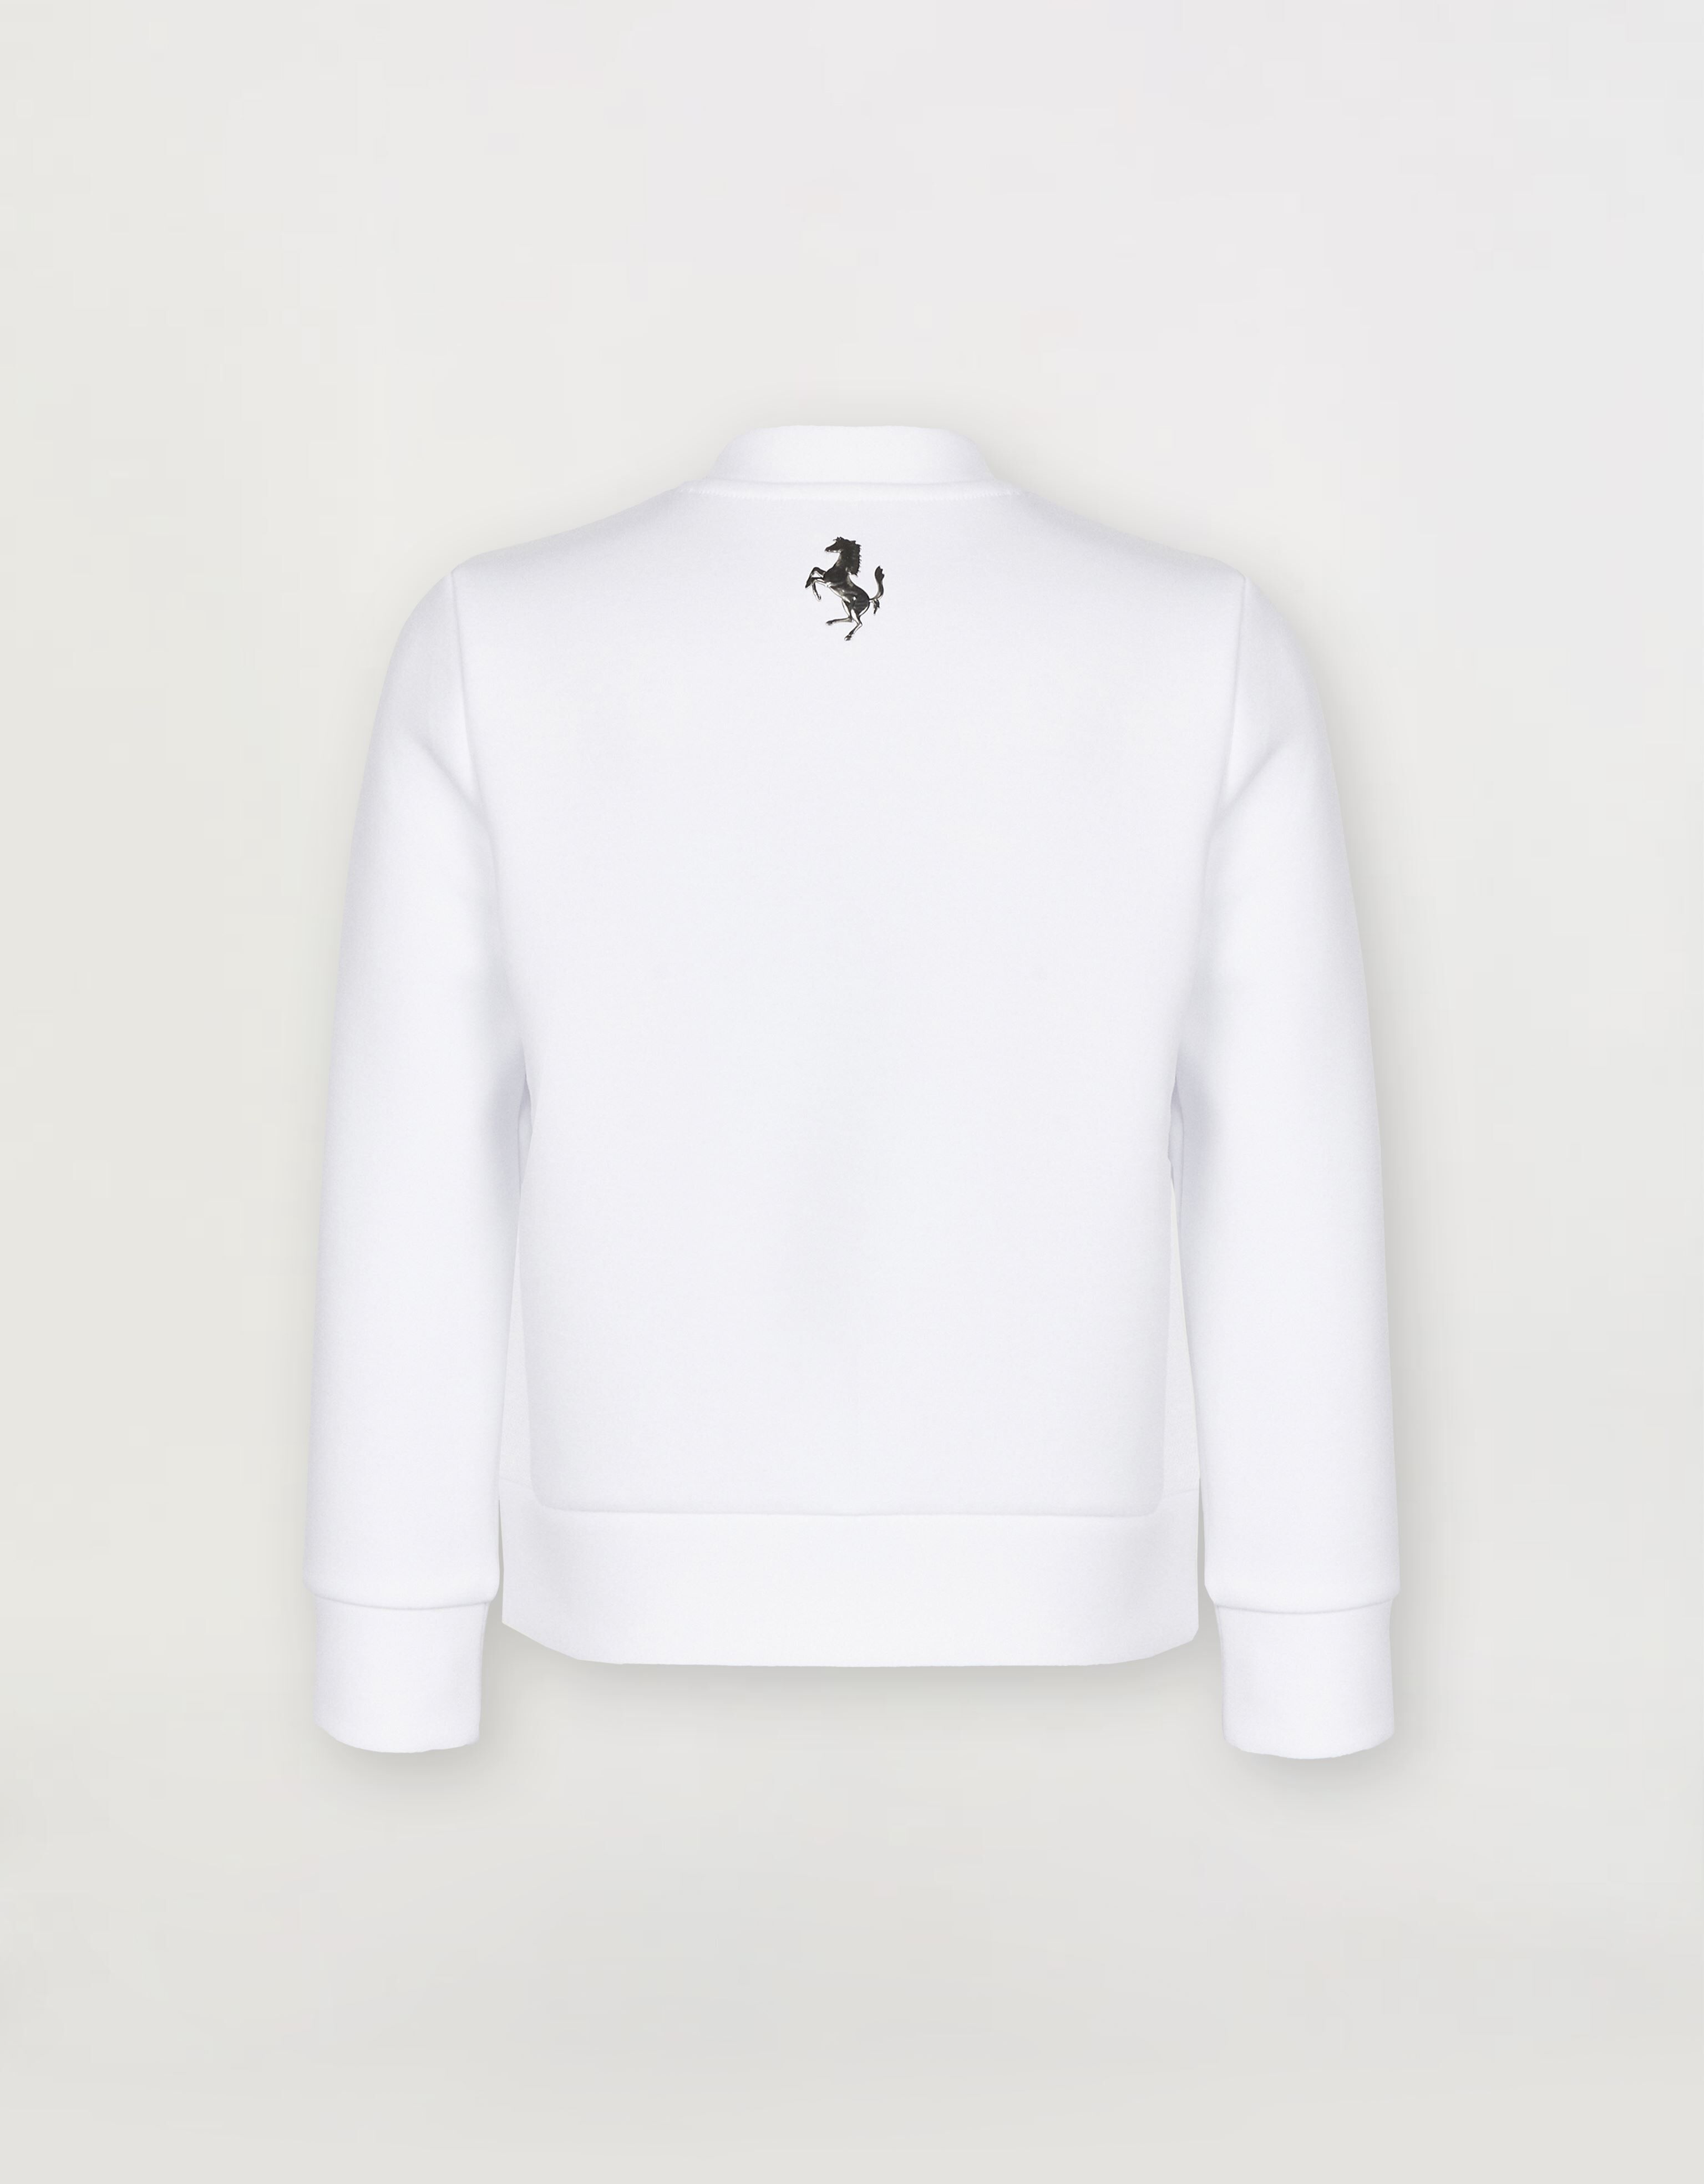 Ferrari Children’s sweatshirt in recycled scuba fabric with large Ferrari logo 光学白 46994fK